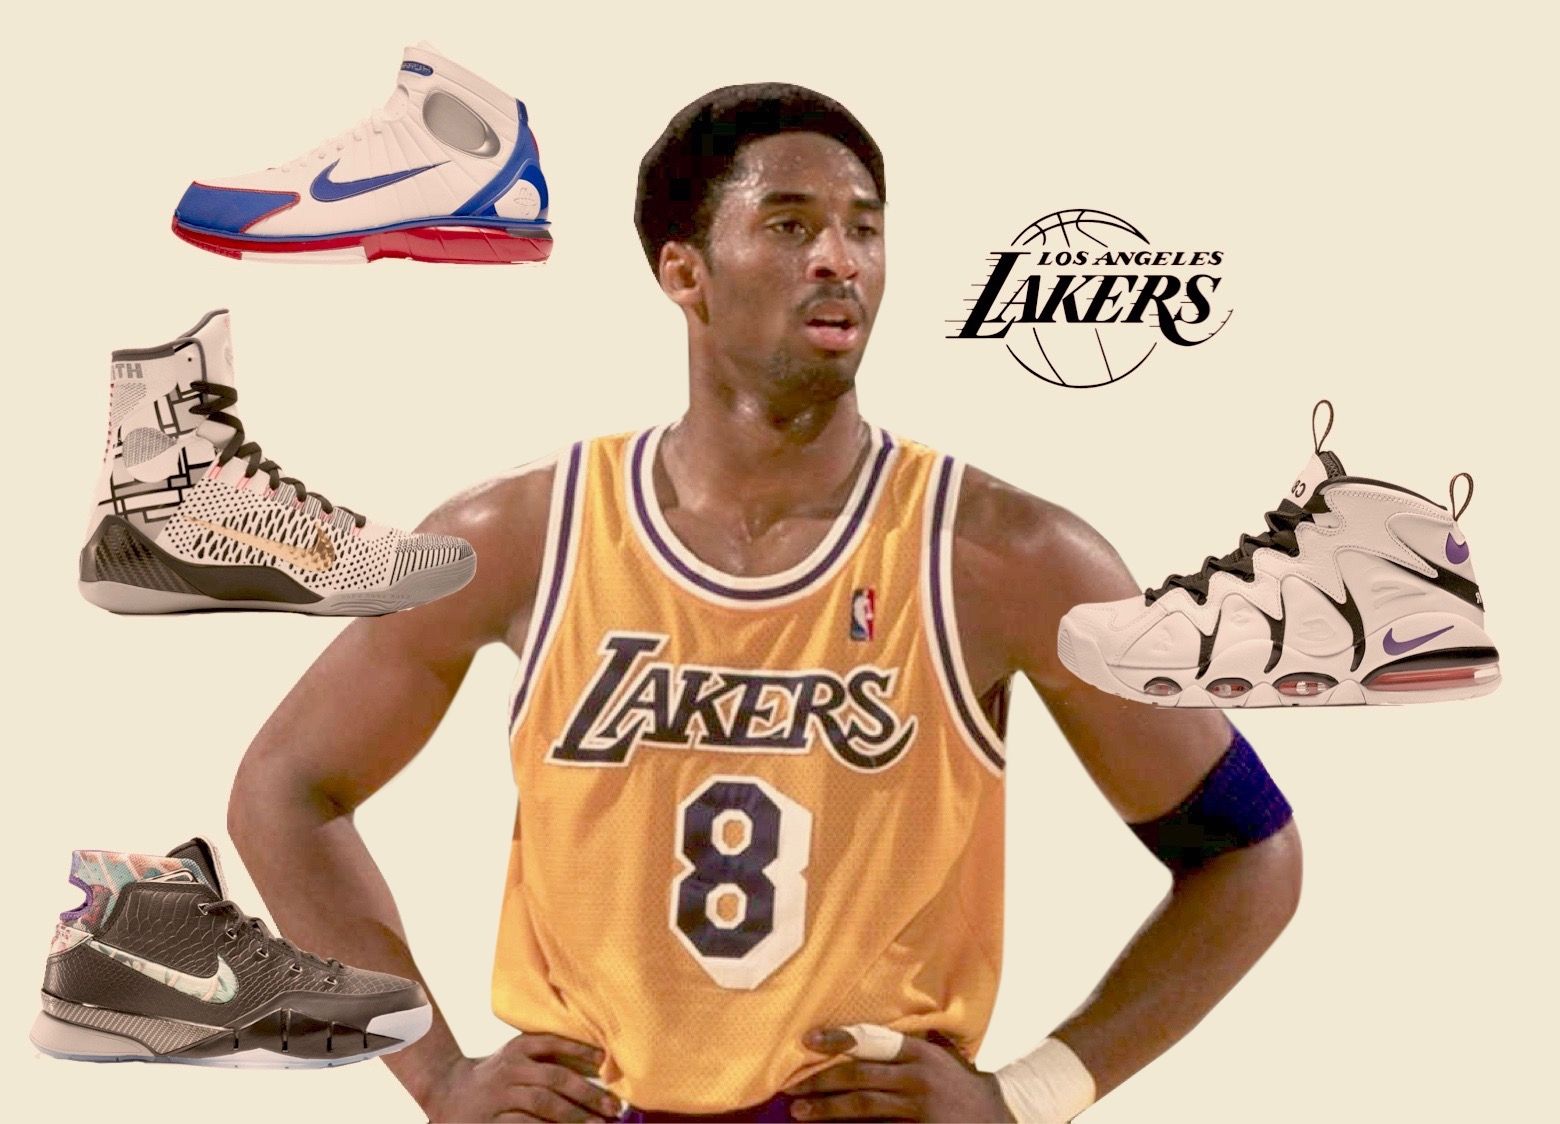 Nike, Shirts, Lakers Black Mamba Nike Shirt Kobe Bryant